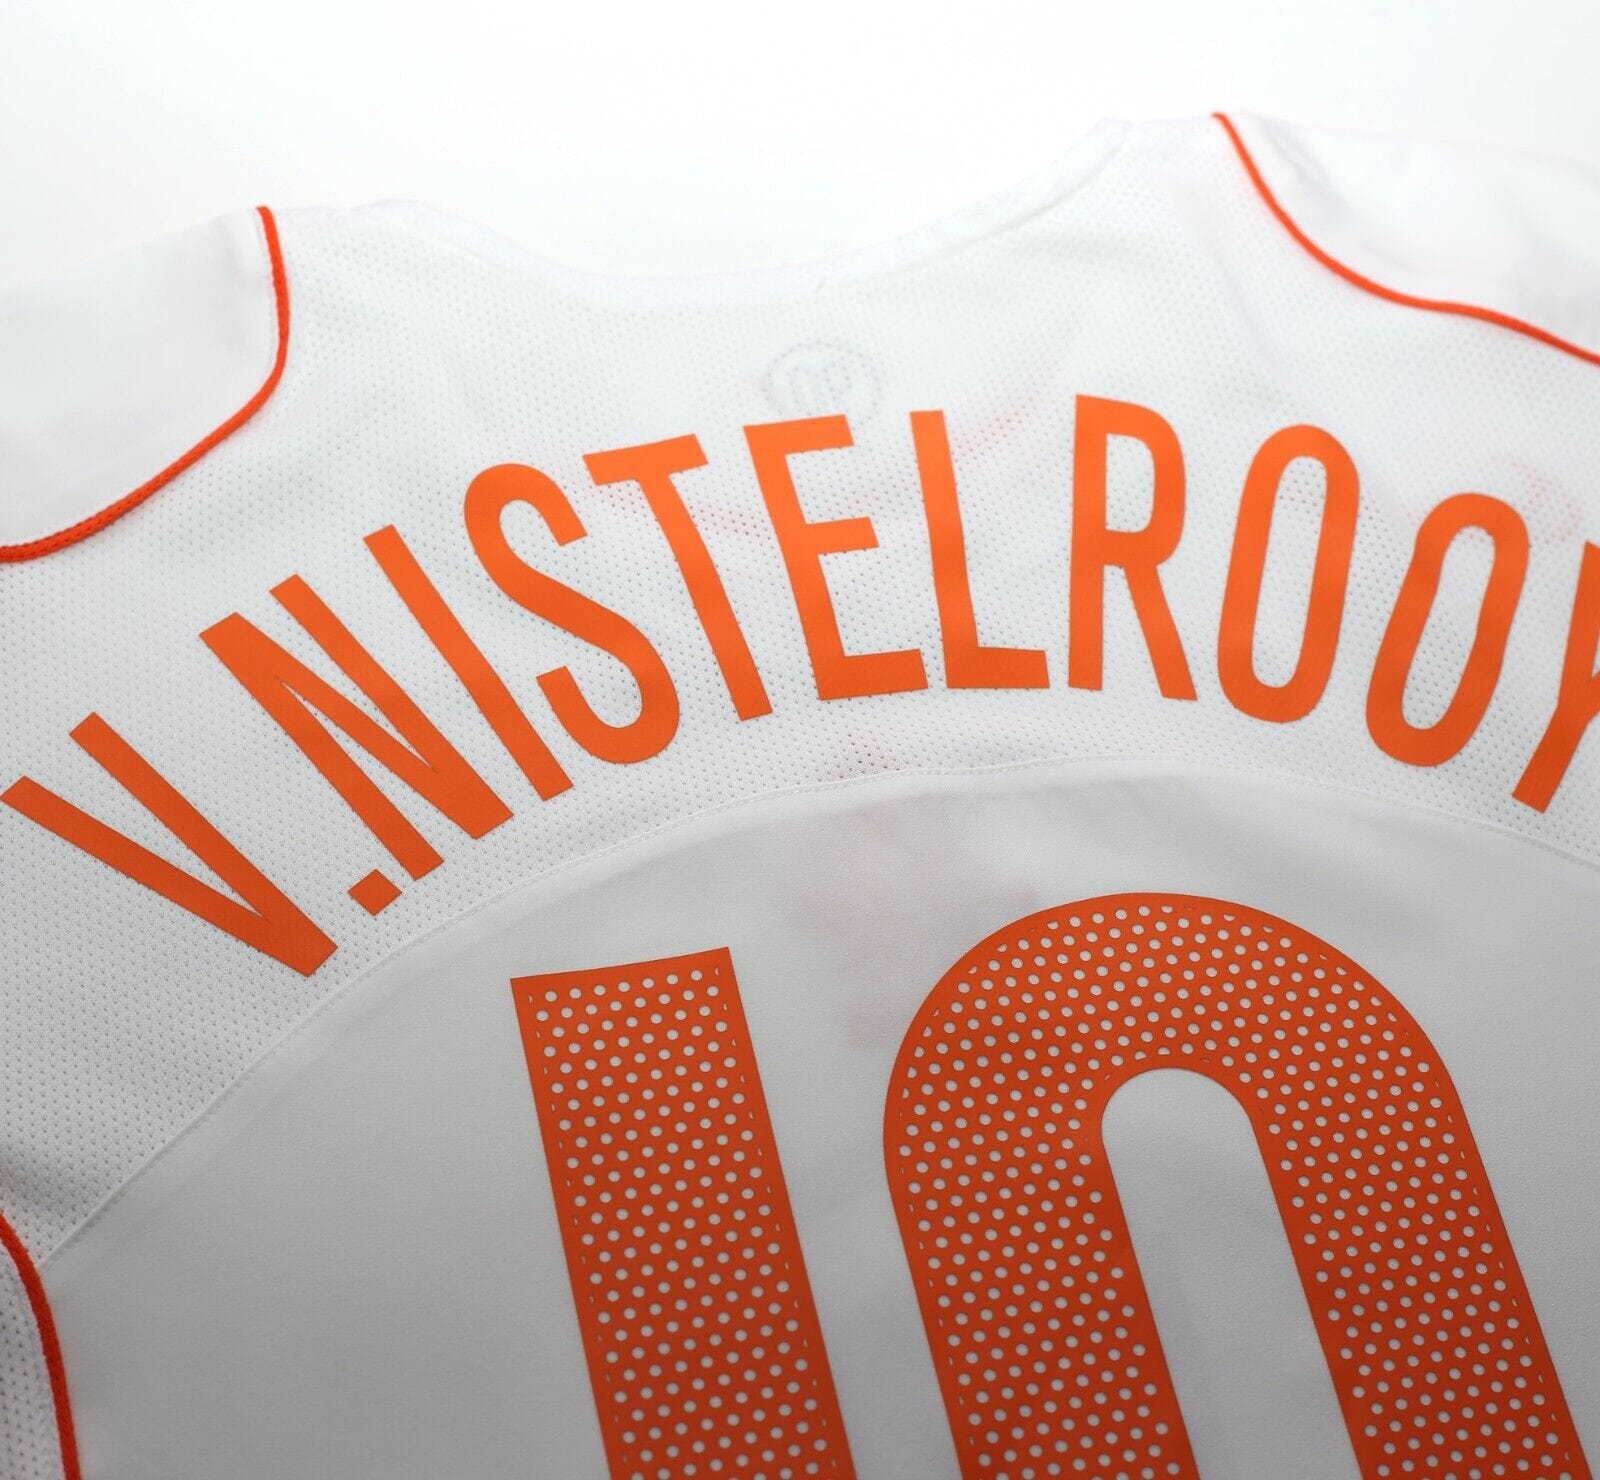 2004/06 Van Nistelrooy #10 Holland Vintage Nike Away Football Shirt (XL)